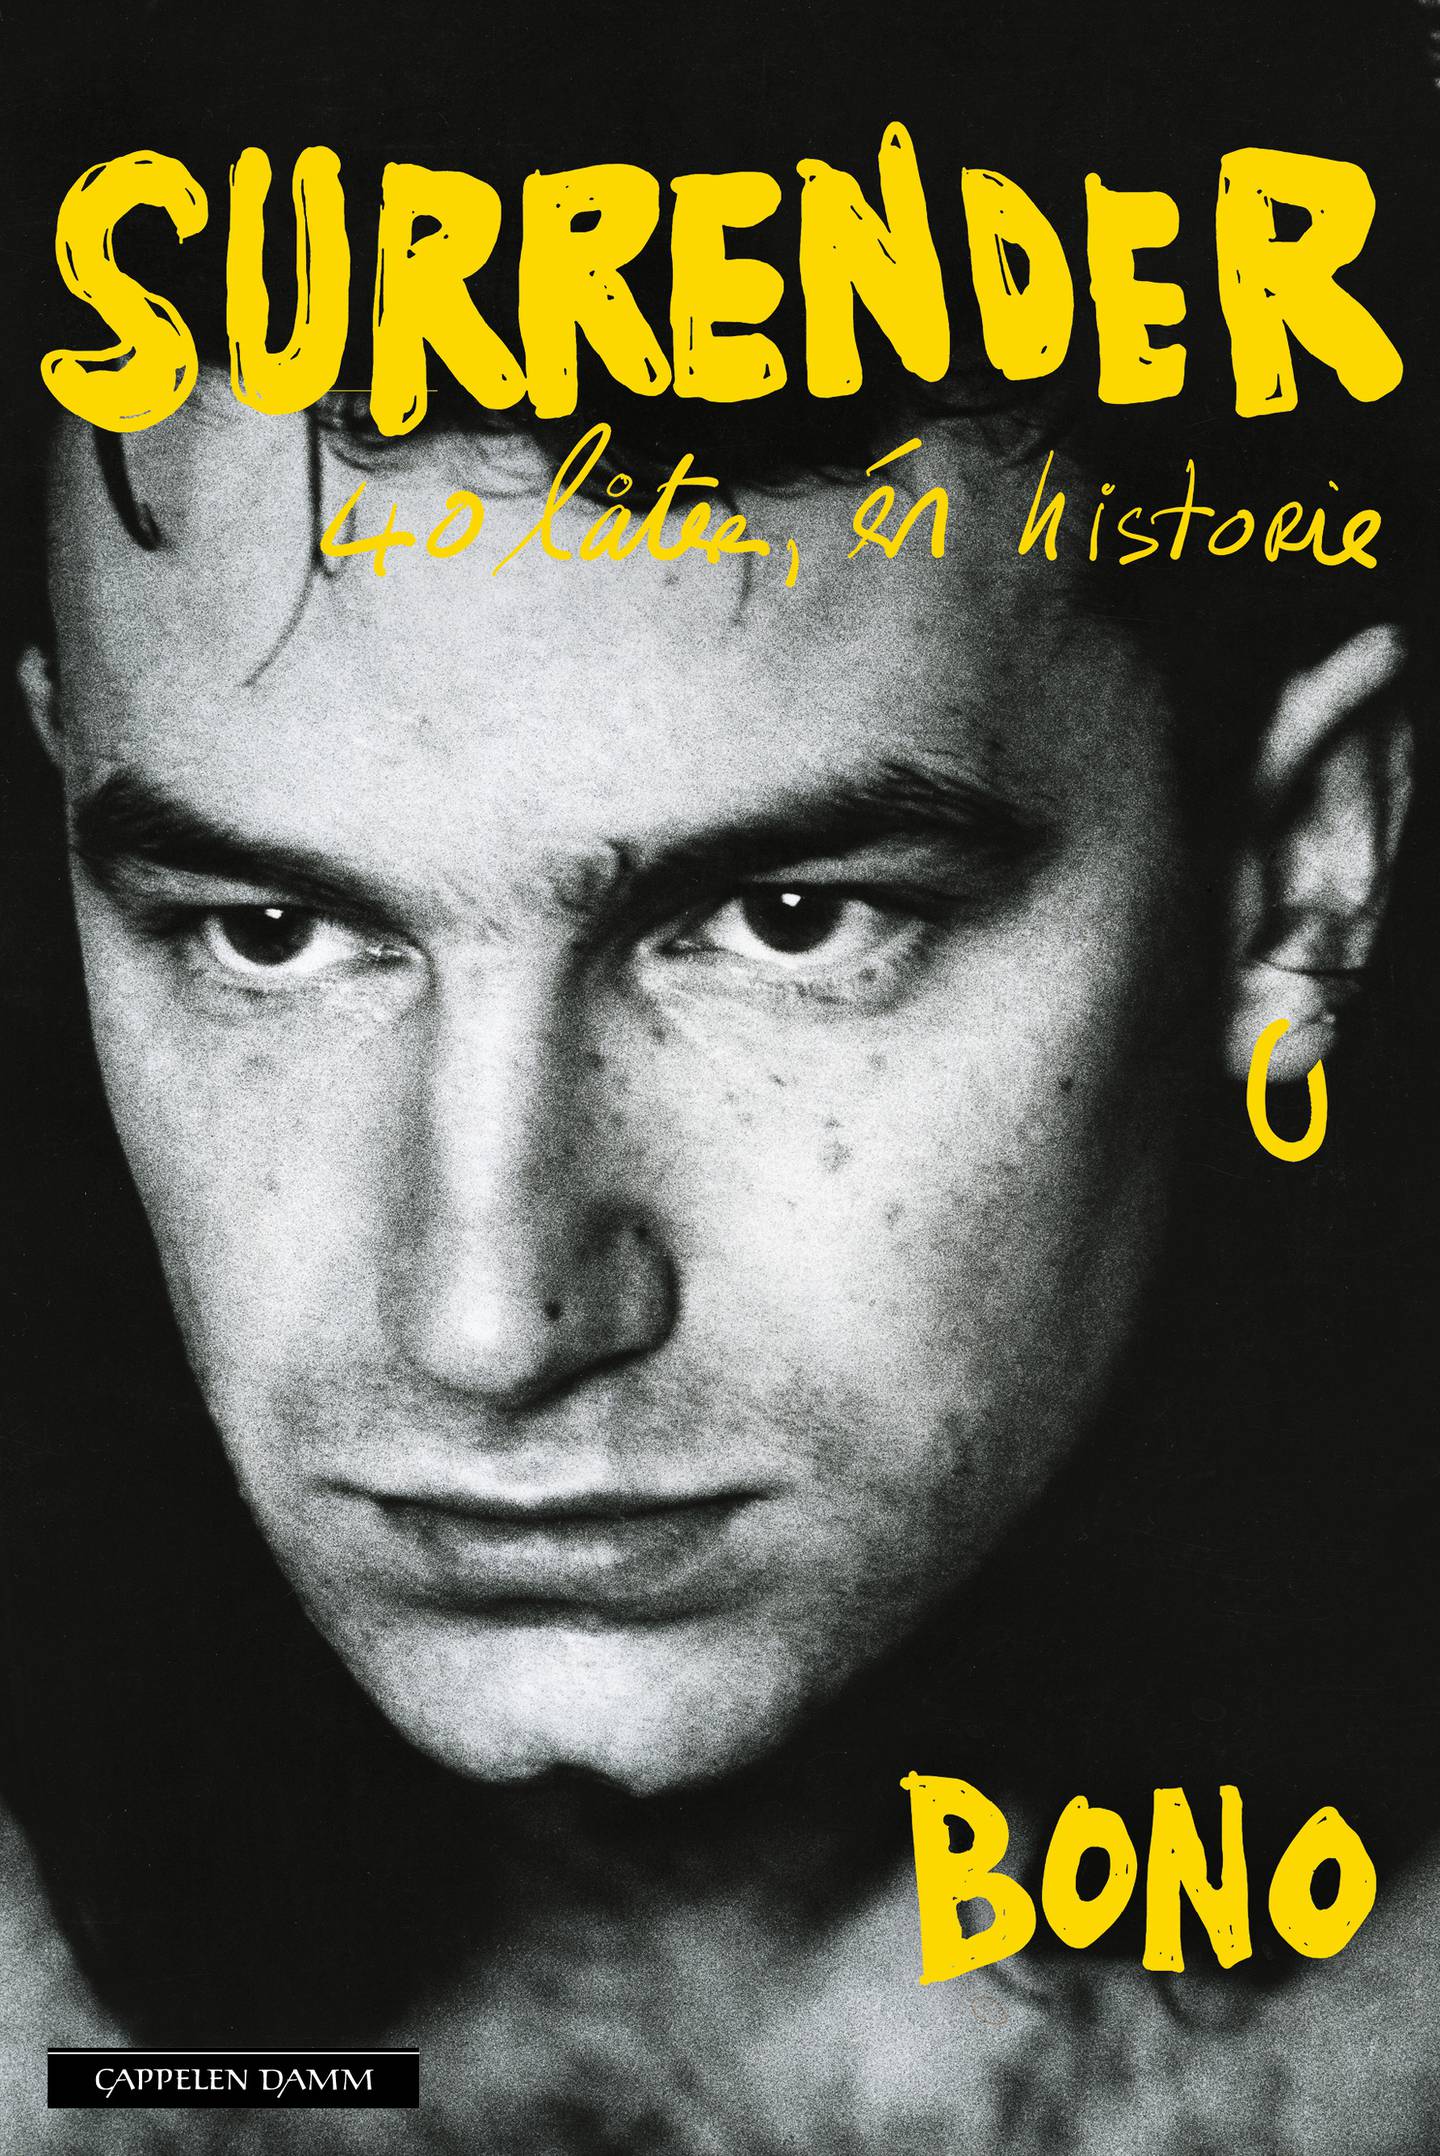 Paul «Bono» Hewson, frontfigur i U2, gir ut sin selvbiografi «Surrender»